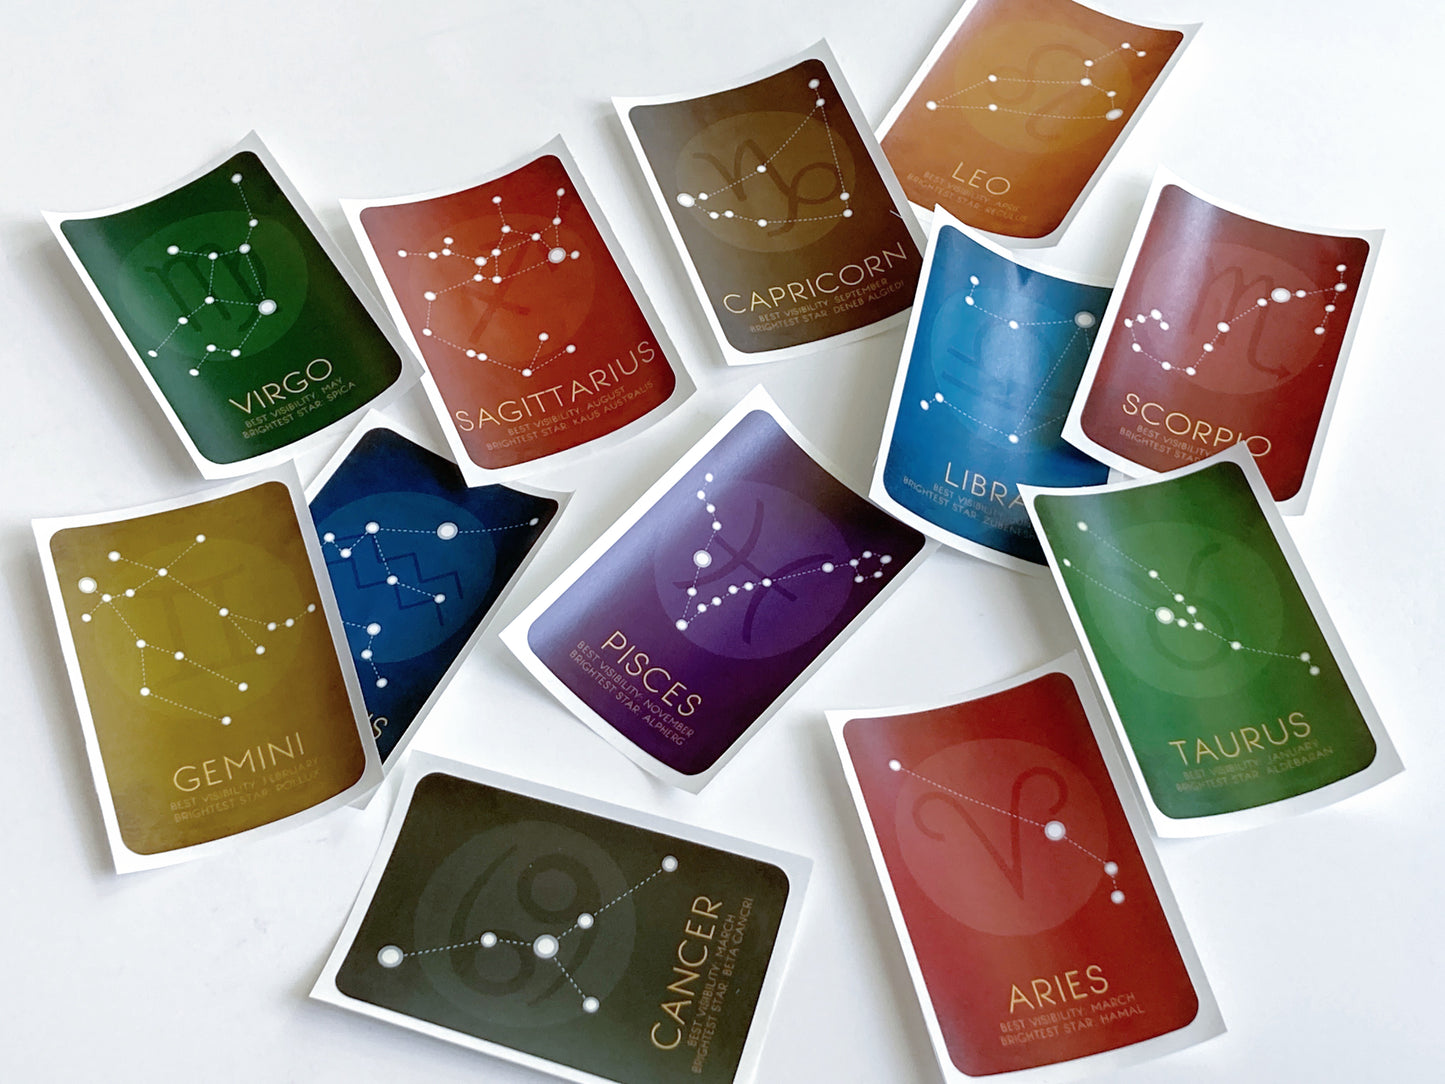 Zodiac Constellation Stickers, Astronomy Gift